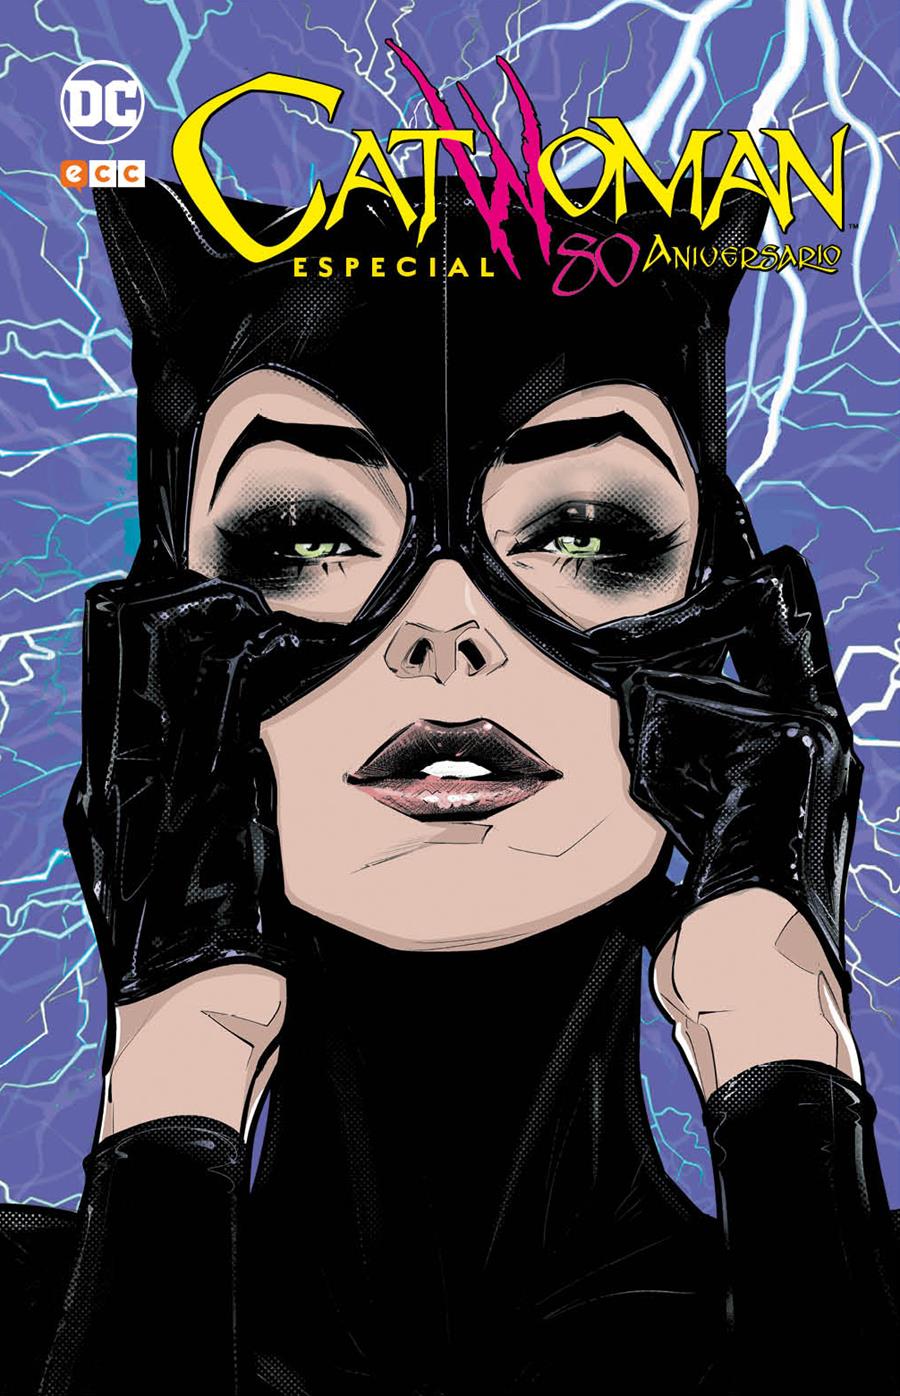 Catwoman: Especial 80 aniversario | N1020-ECC121 | Varios autores | Terra de Còmic - Tu tienda de cómics online especializada en cómics, manga y merchandising